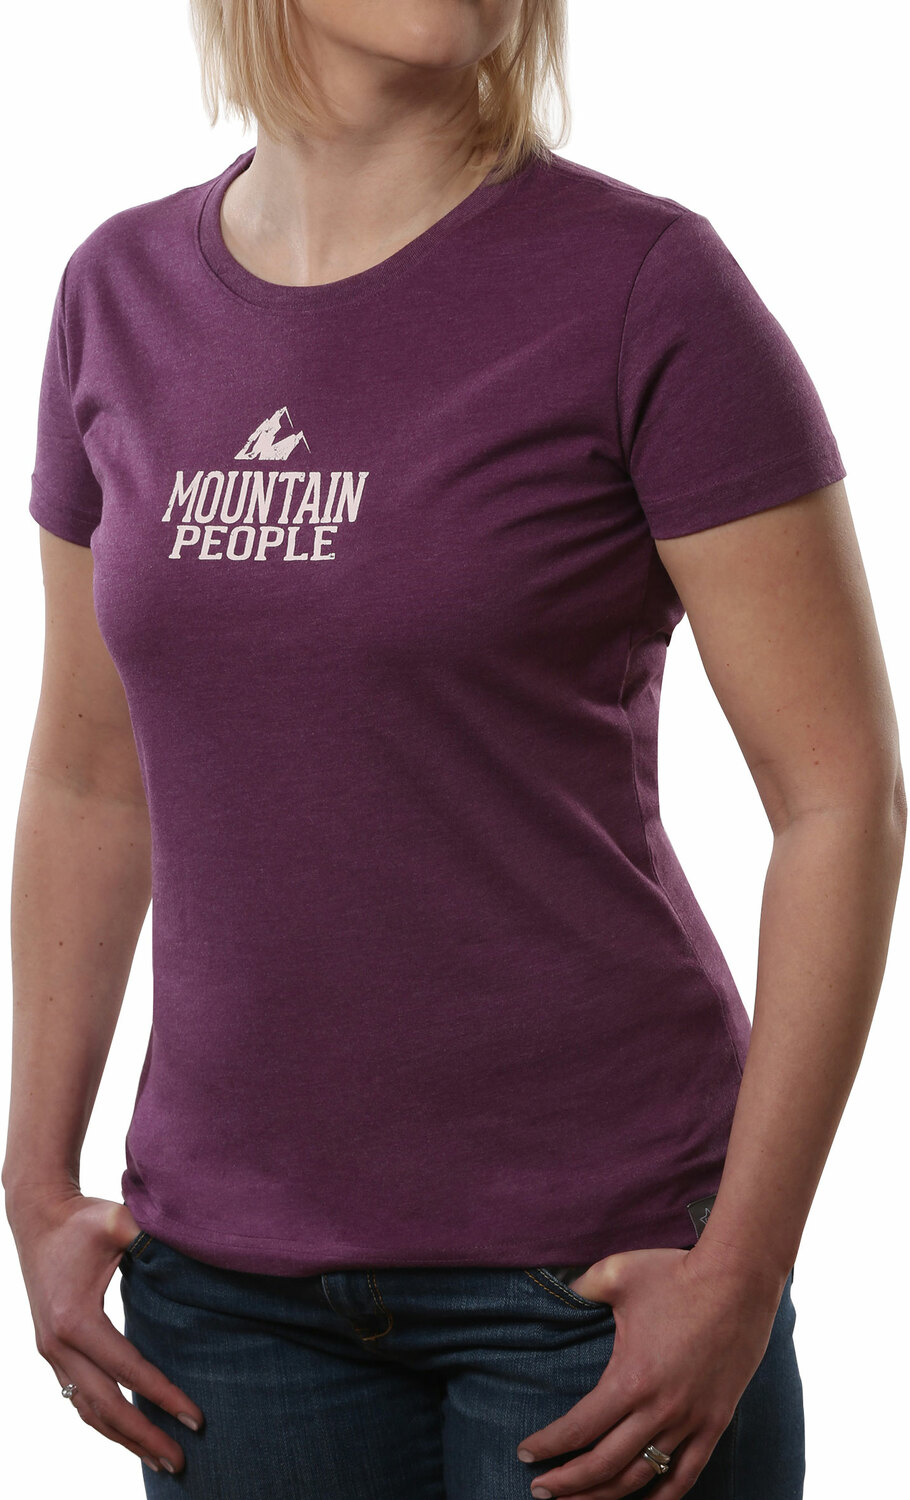 Mountain People by We People - Mountain People - Medium Purple Women's T-Shirt